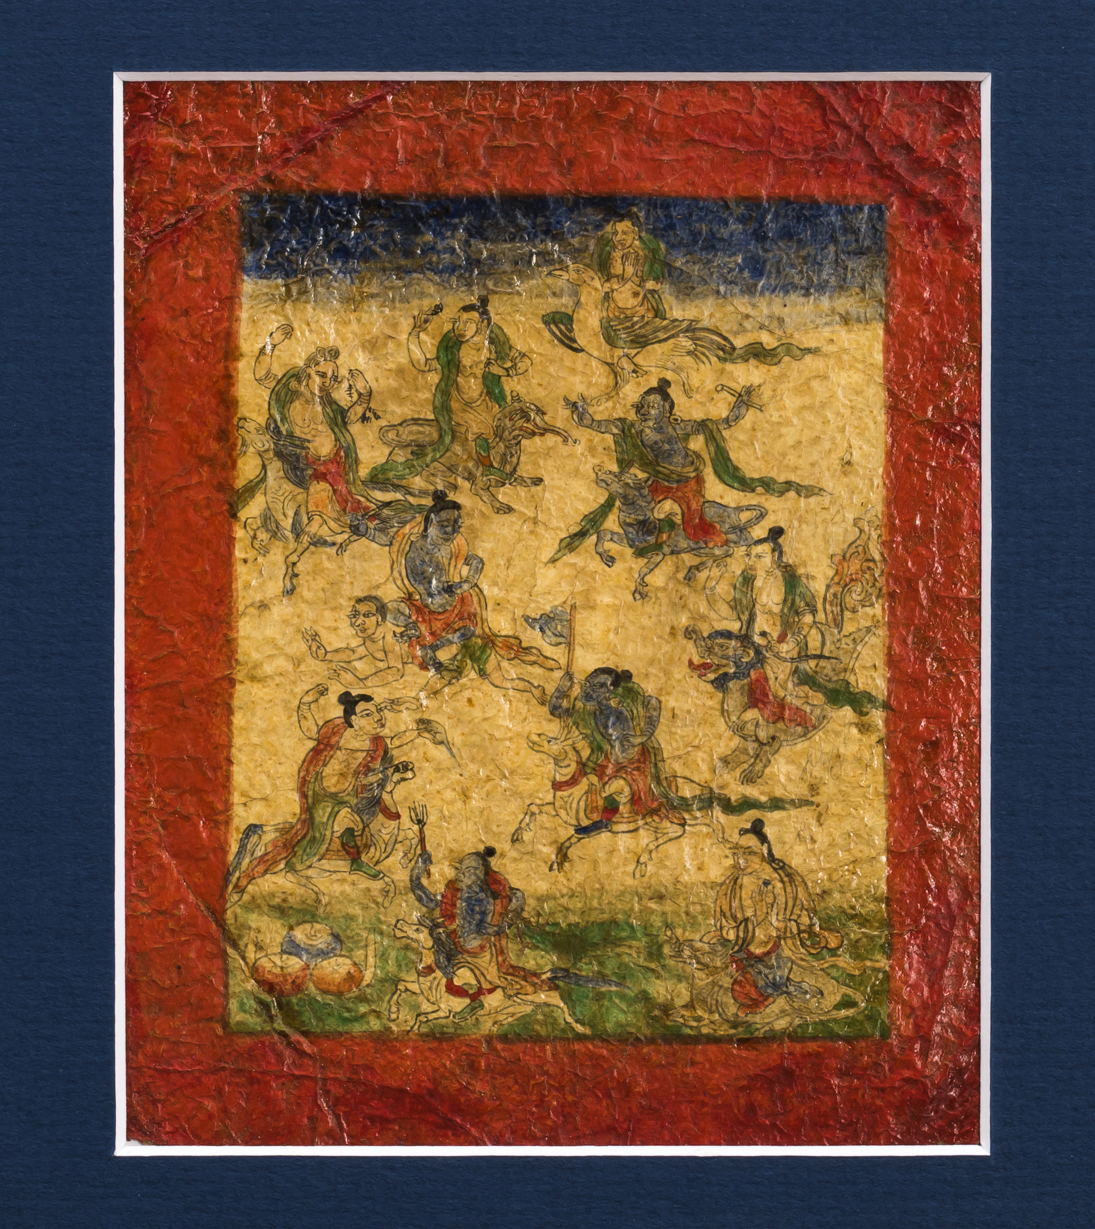 Six Tibetan Tsakli Paintings Teaching Cards of Bardo Deities